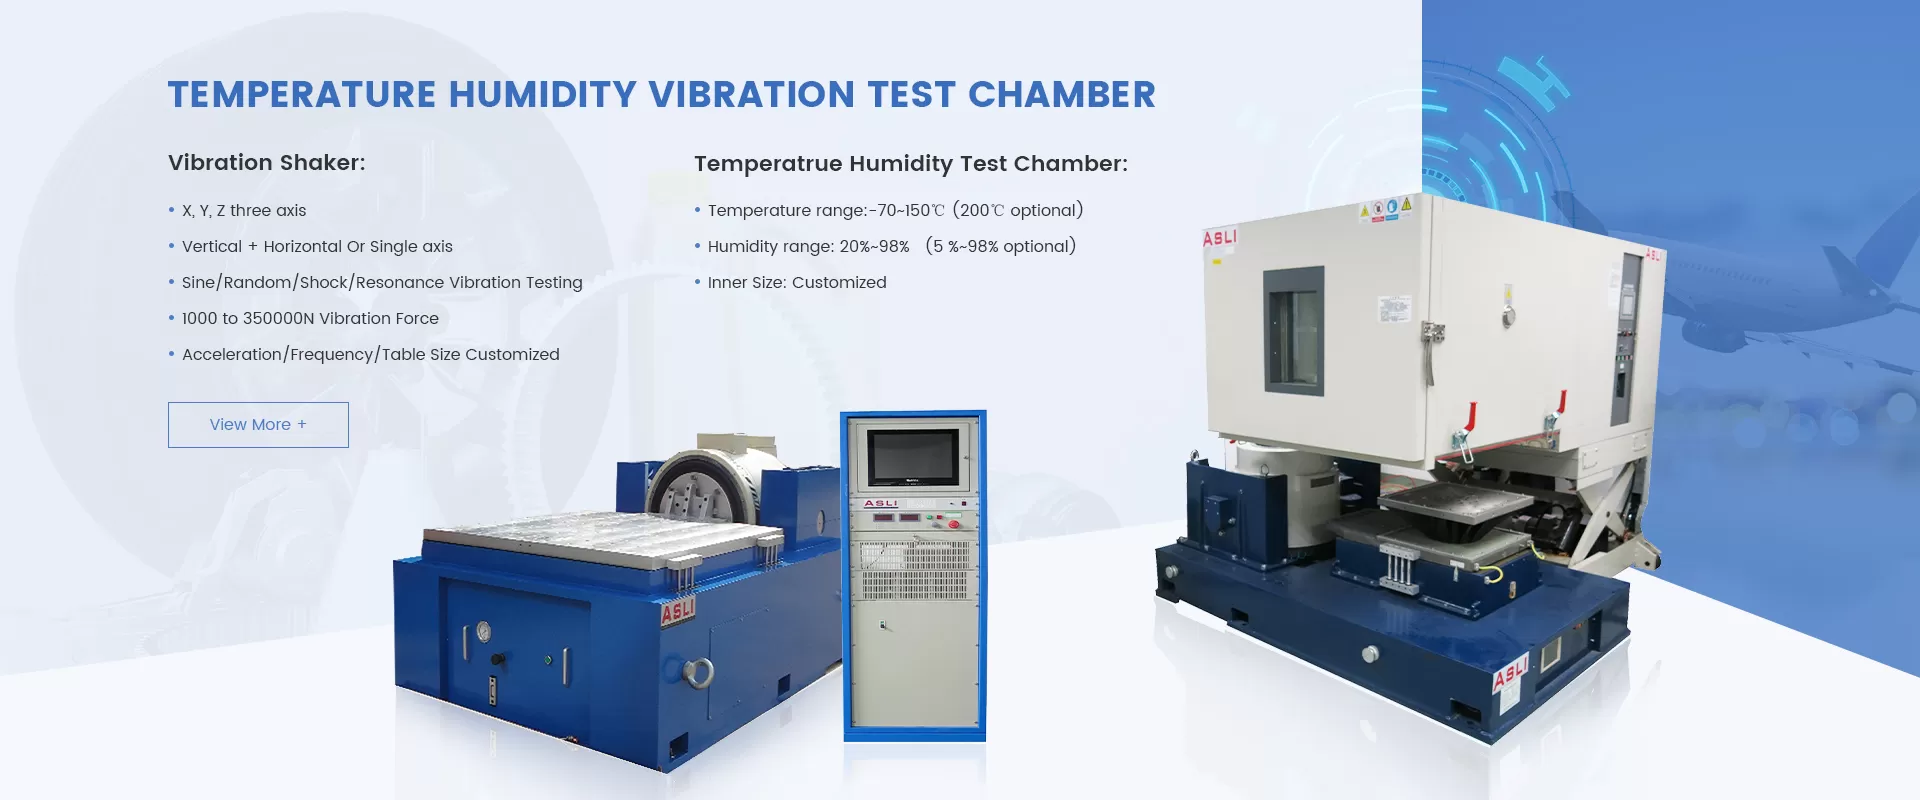 Temperature Humidity Vibration Test Chamber